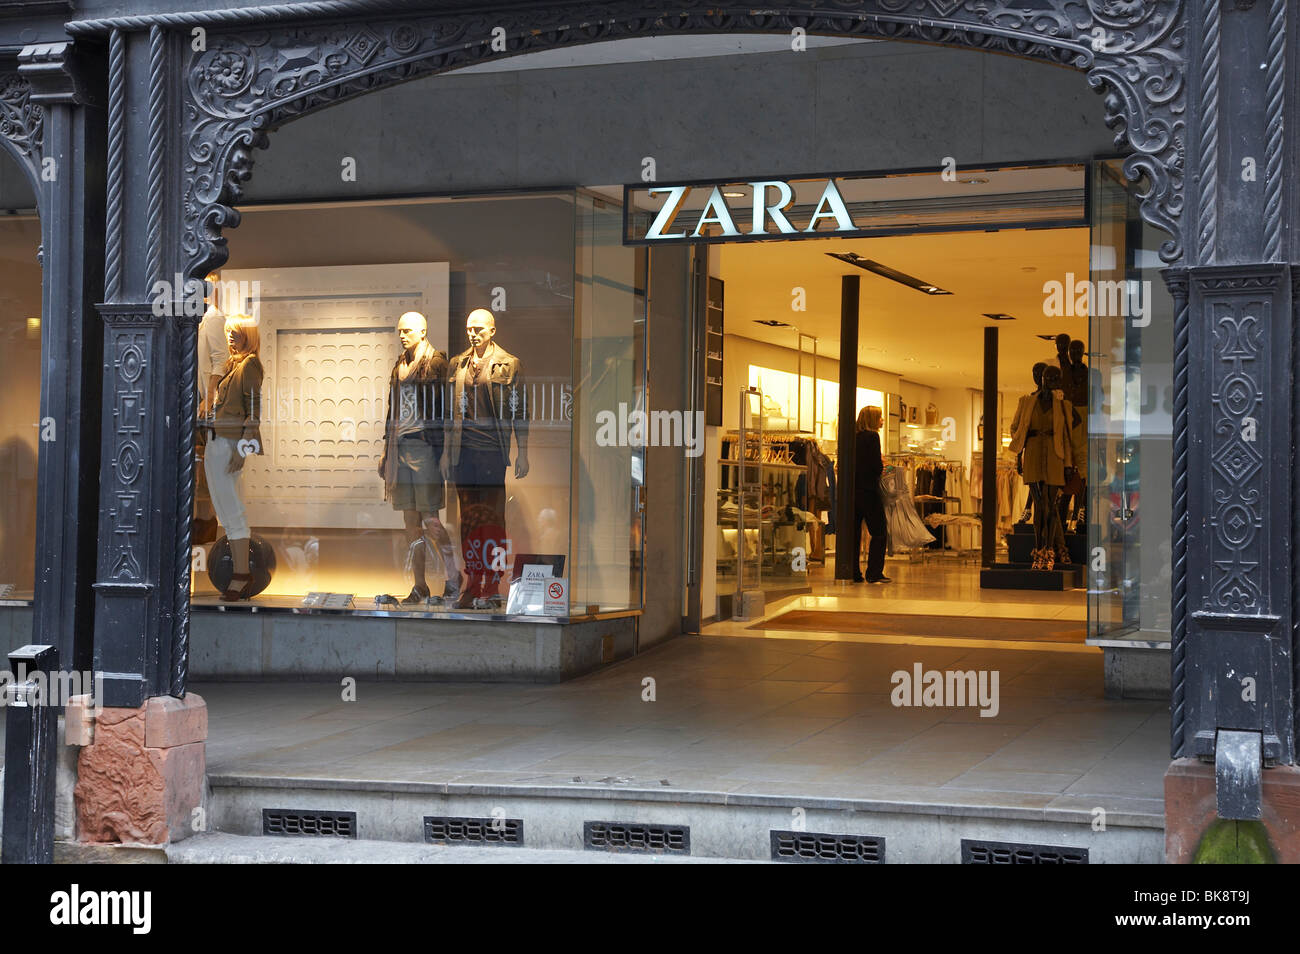 Zara fashion shop in Chester UK Stock Photo - Alamy